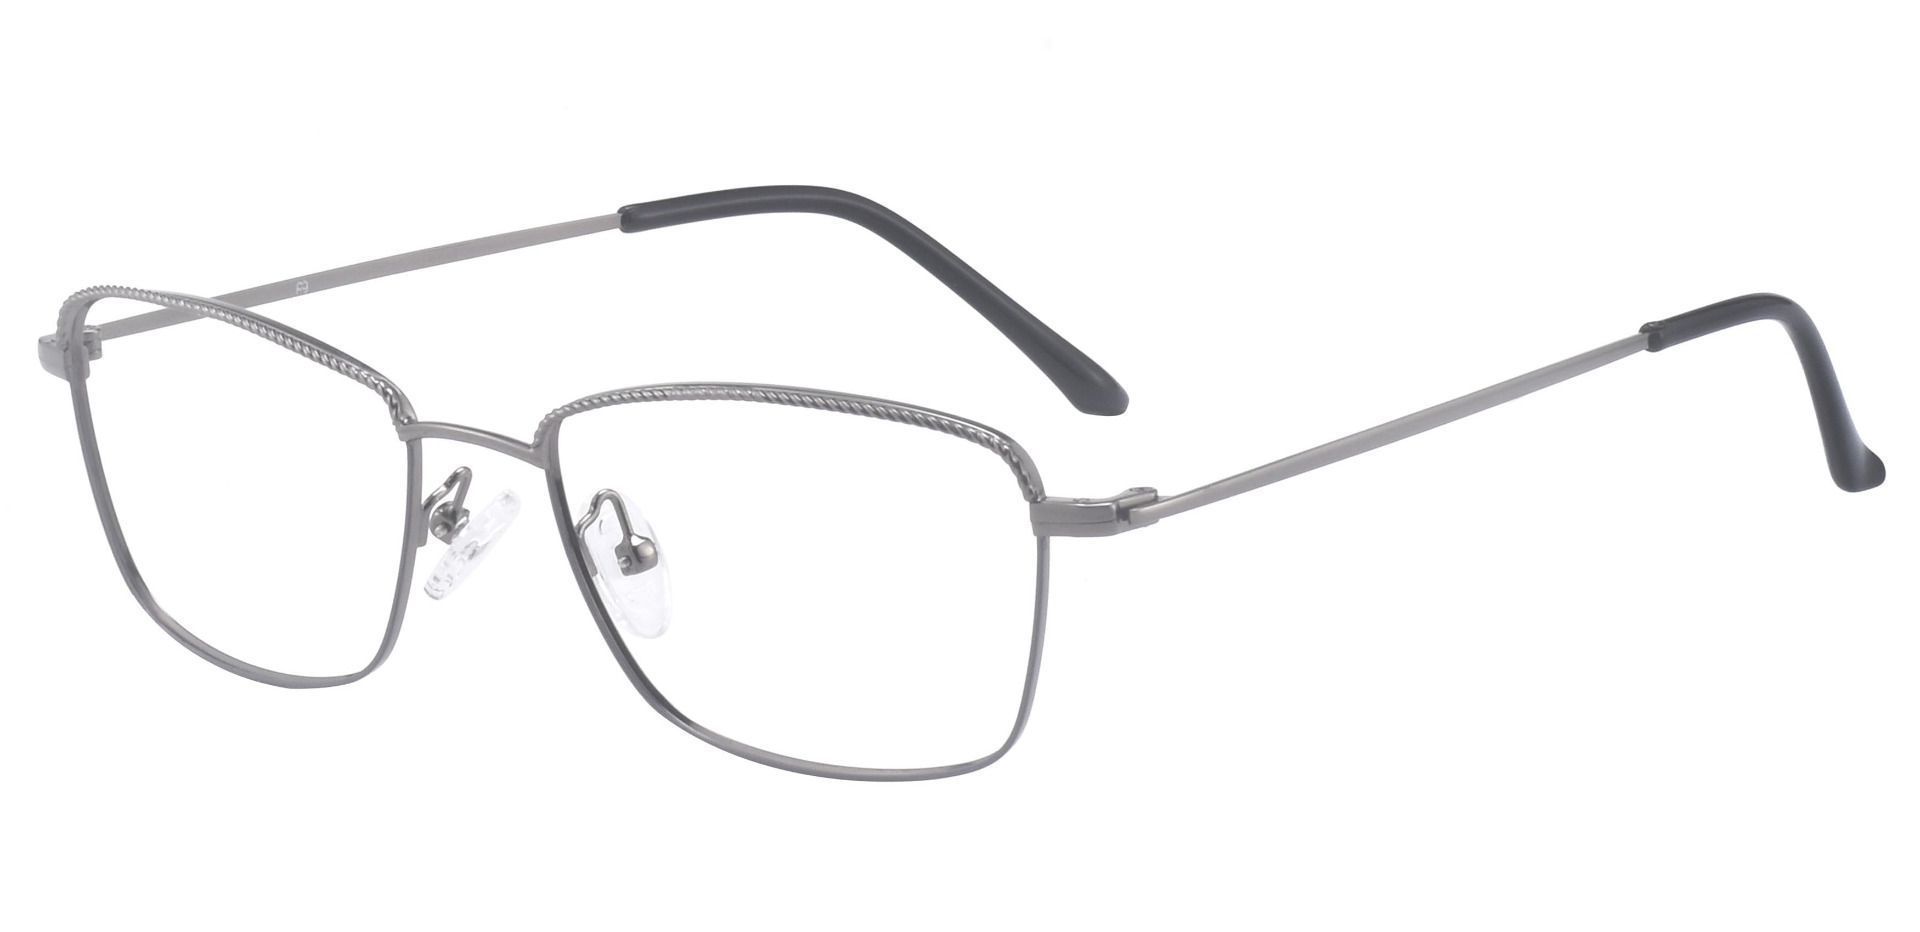 Heath Rectangle Lined Bifocal Glasses - Gray | Women's Eyeglasses ...